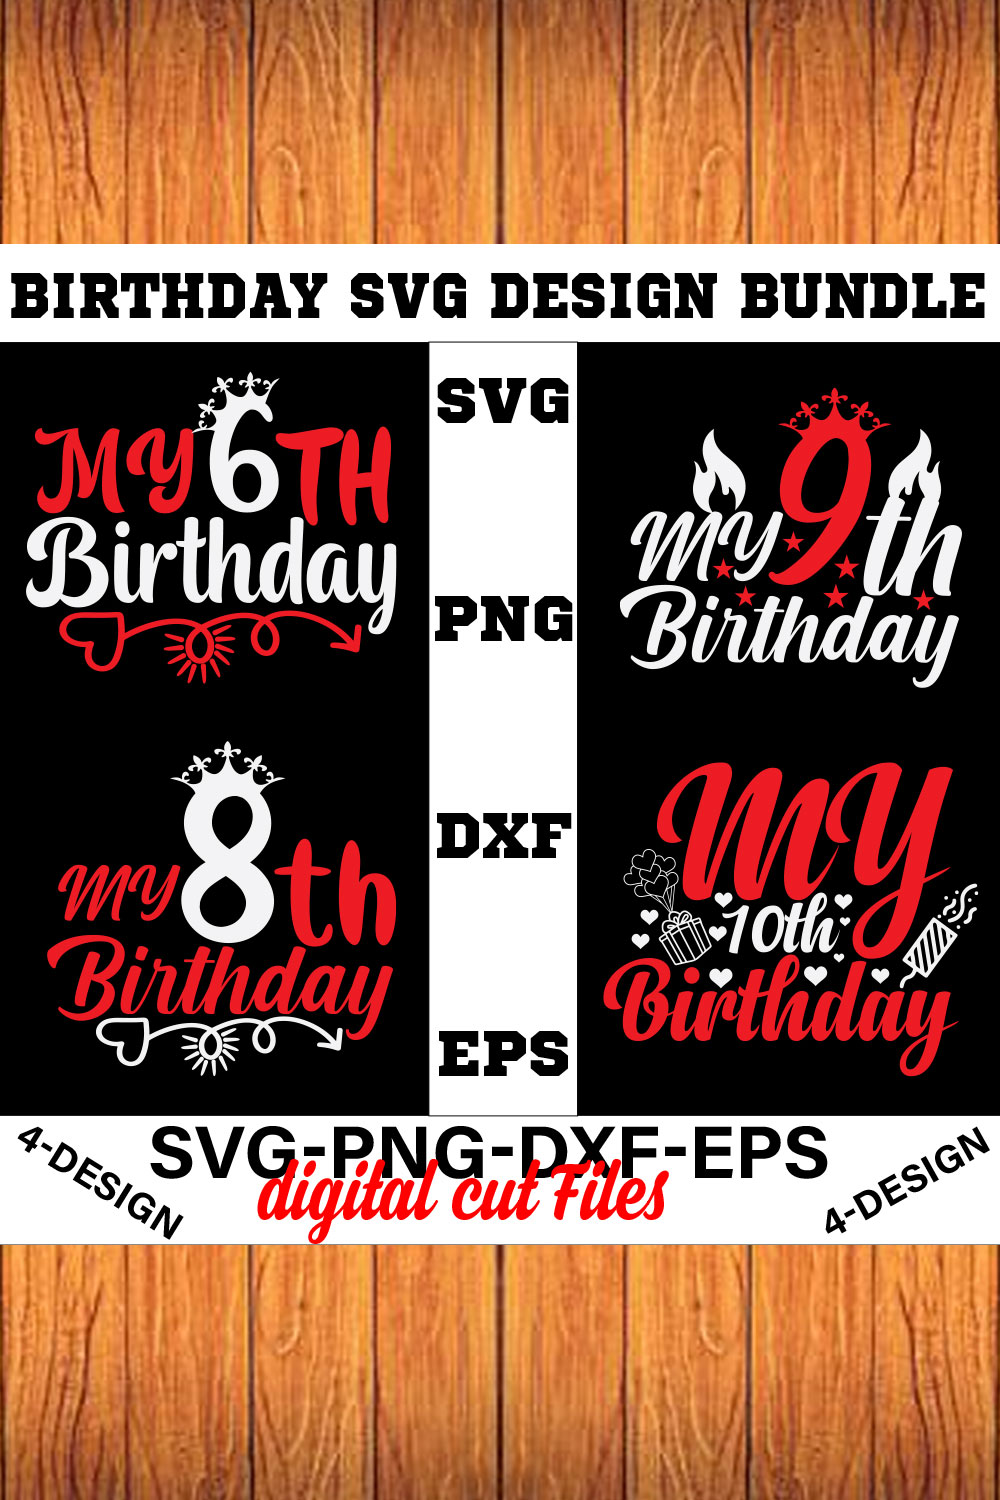 birthday svg design bundle Happy birthday svg bundle hand lettered birthday svg birthday party svg Volume-26 pinterest preview image.